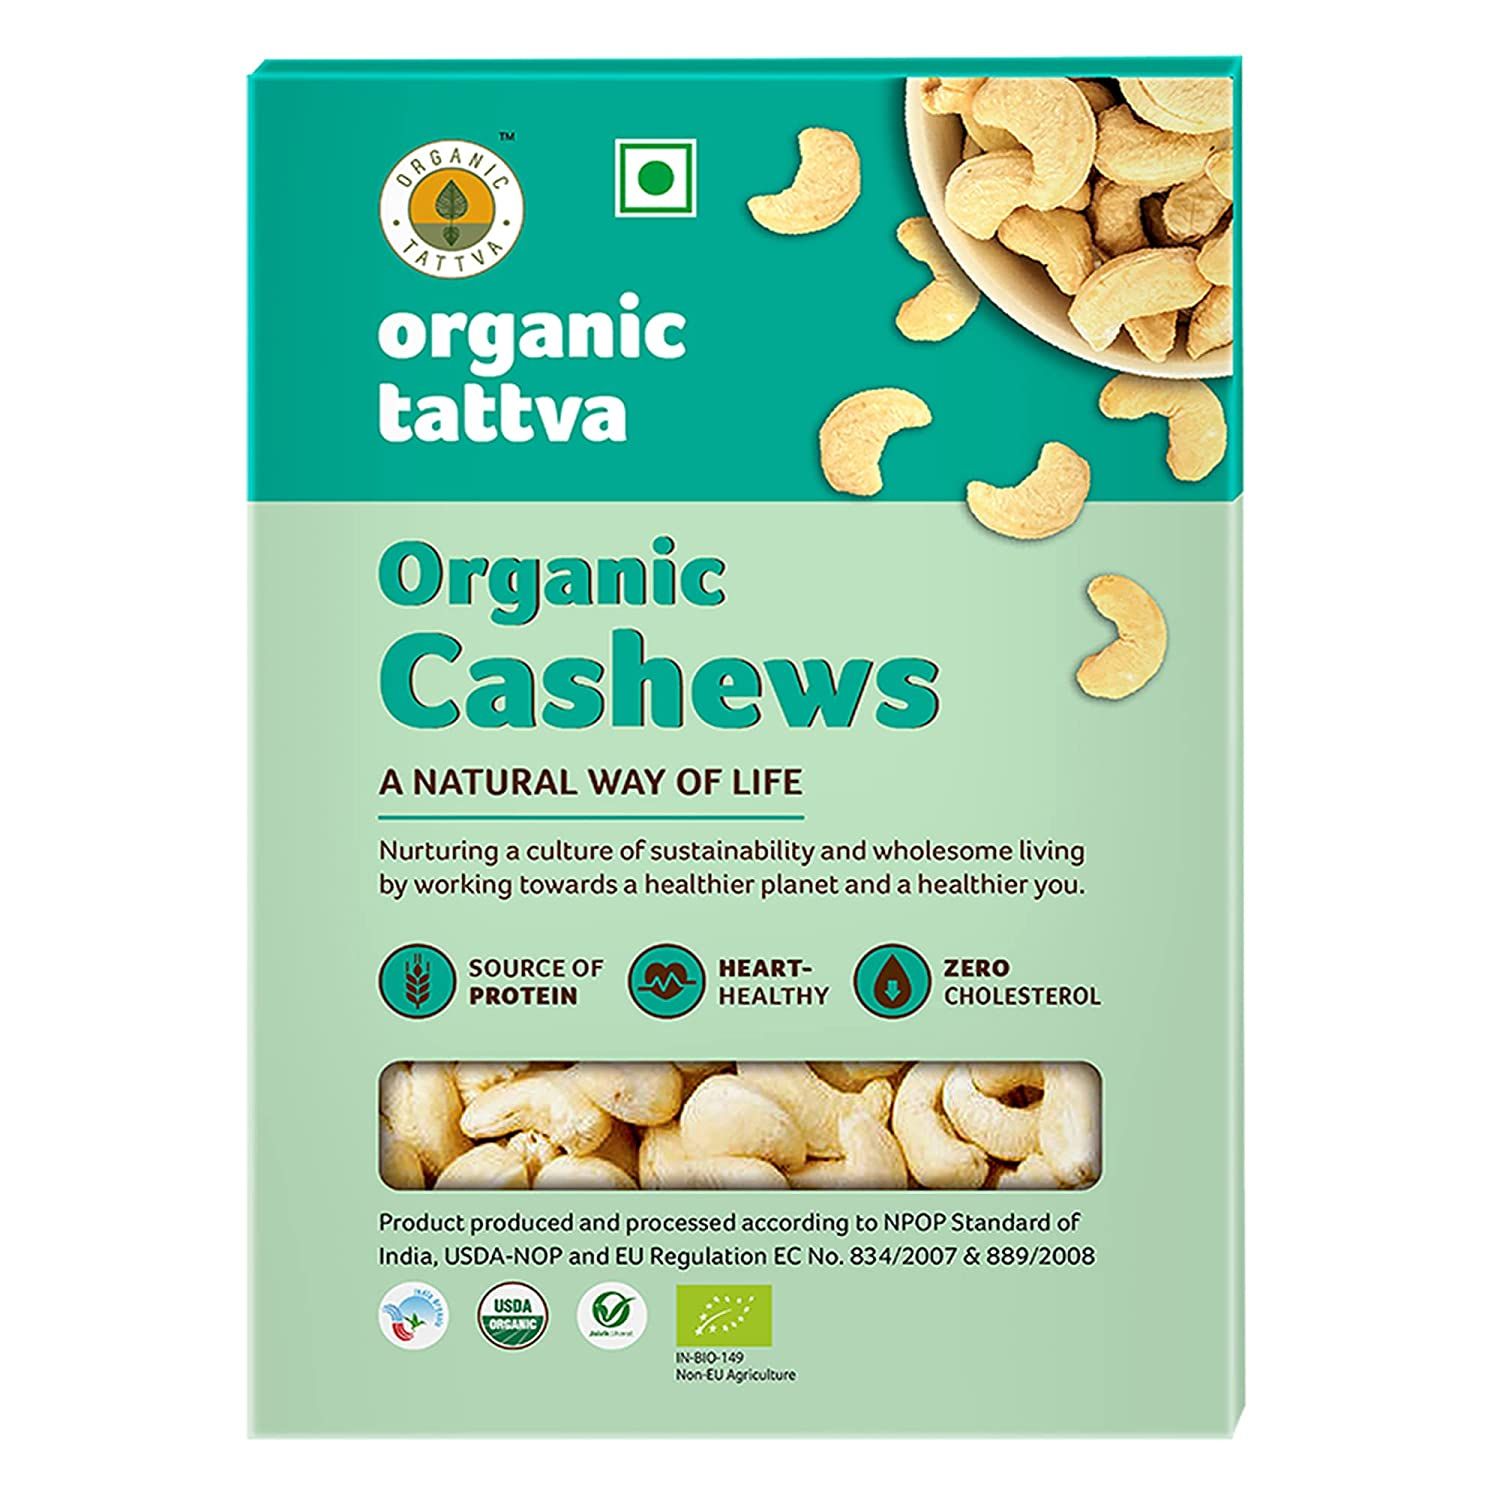 Organic Tattva Cashews Image